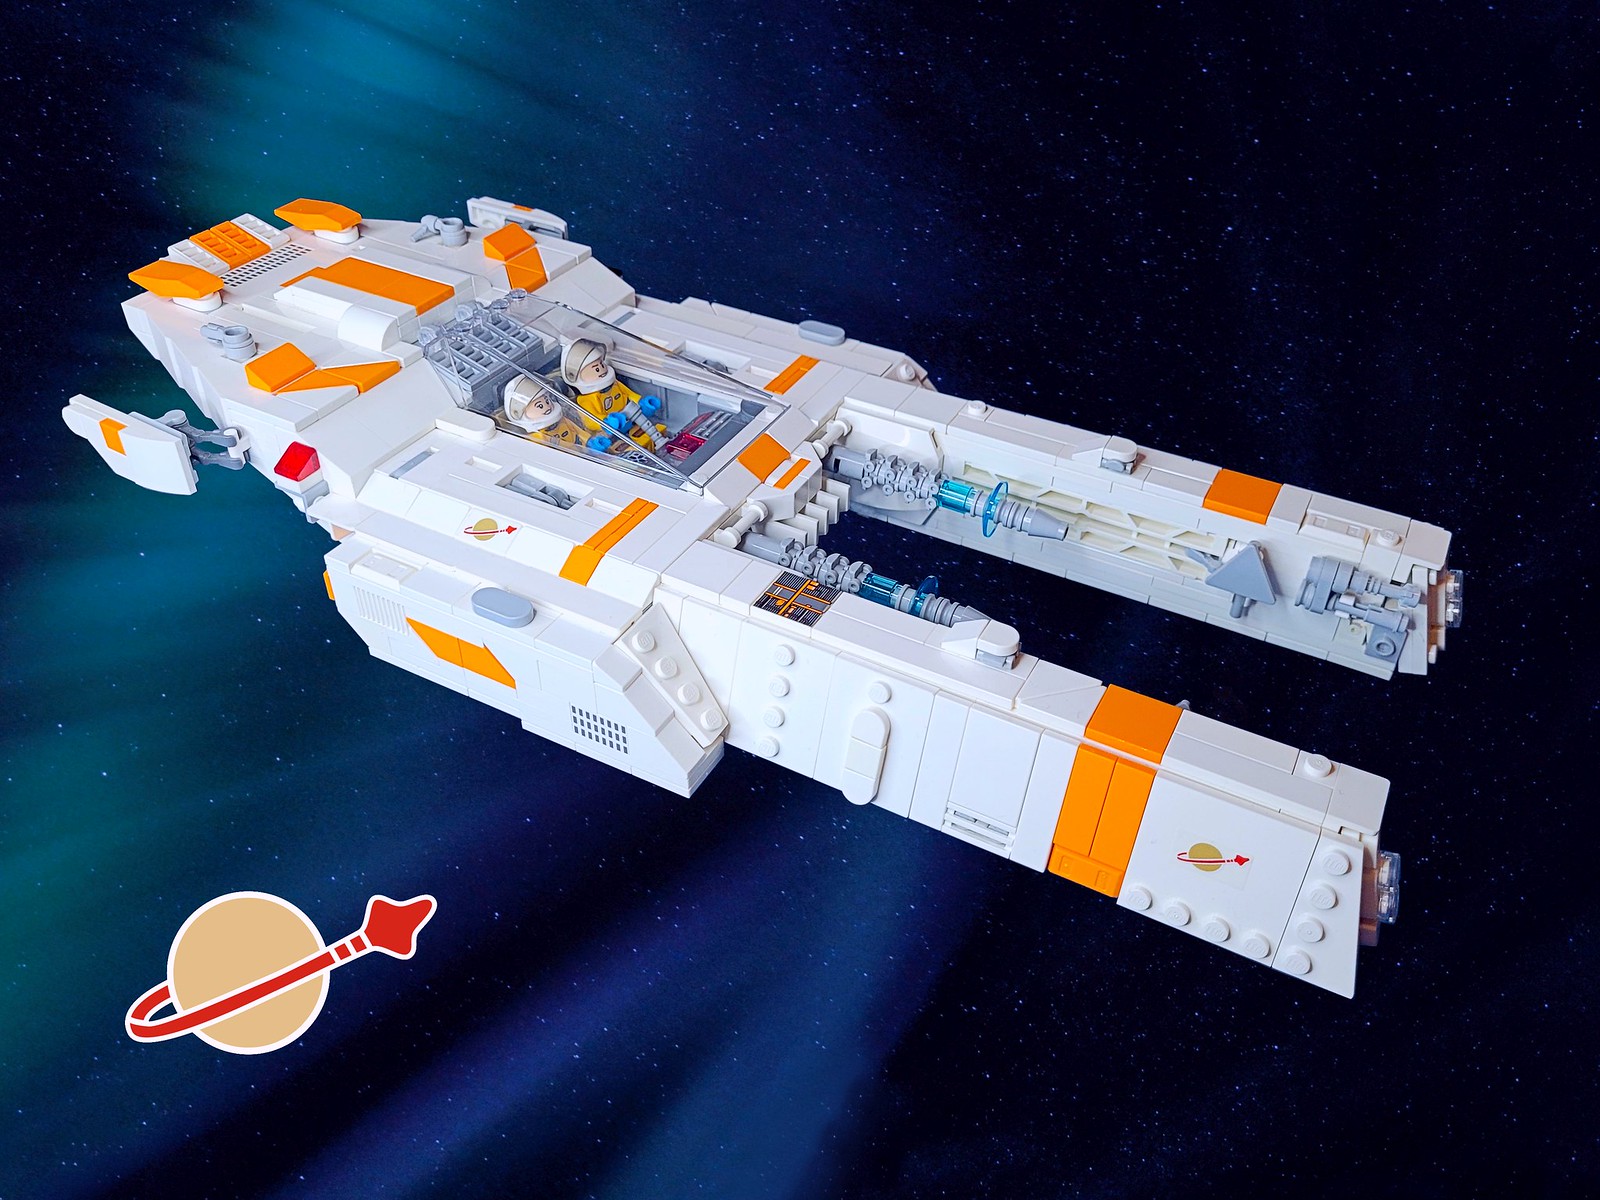 LEGO Spaceship! Totally swooshable!